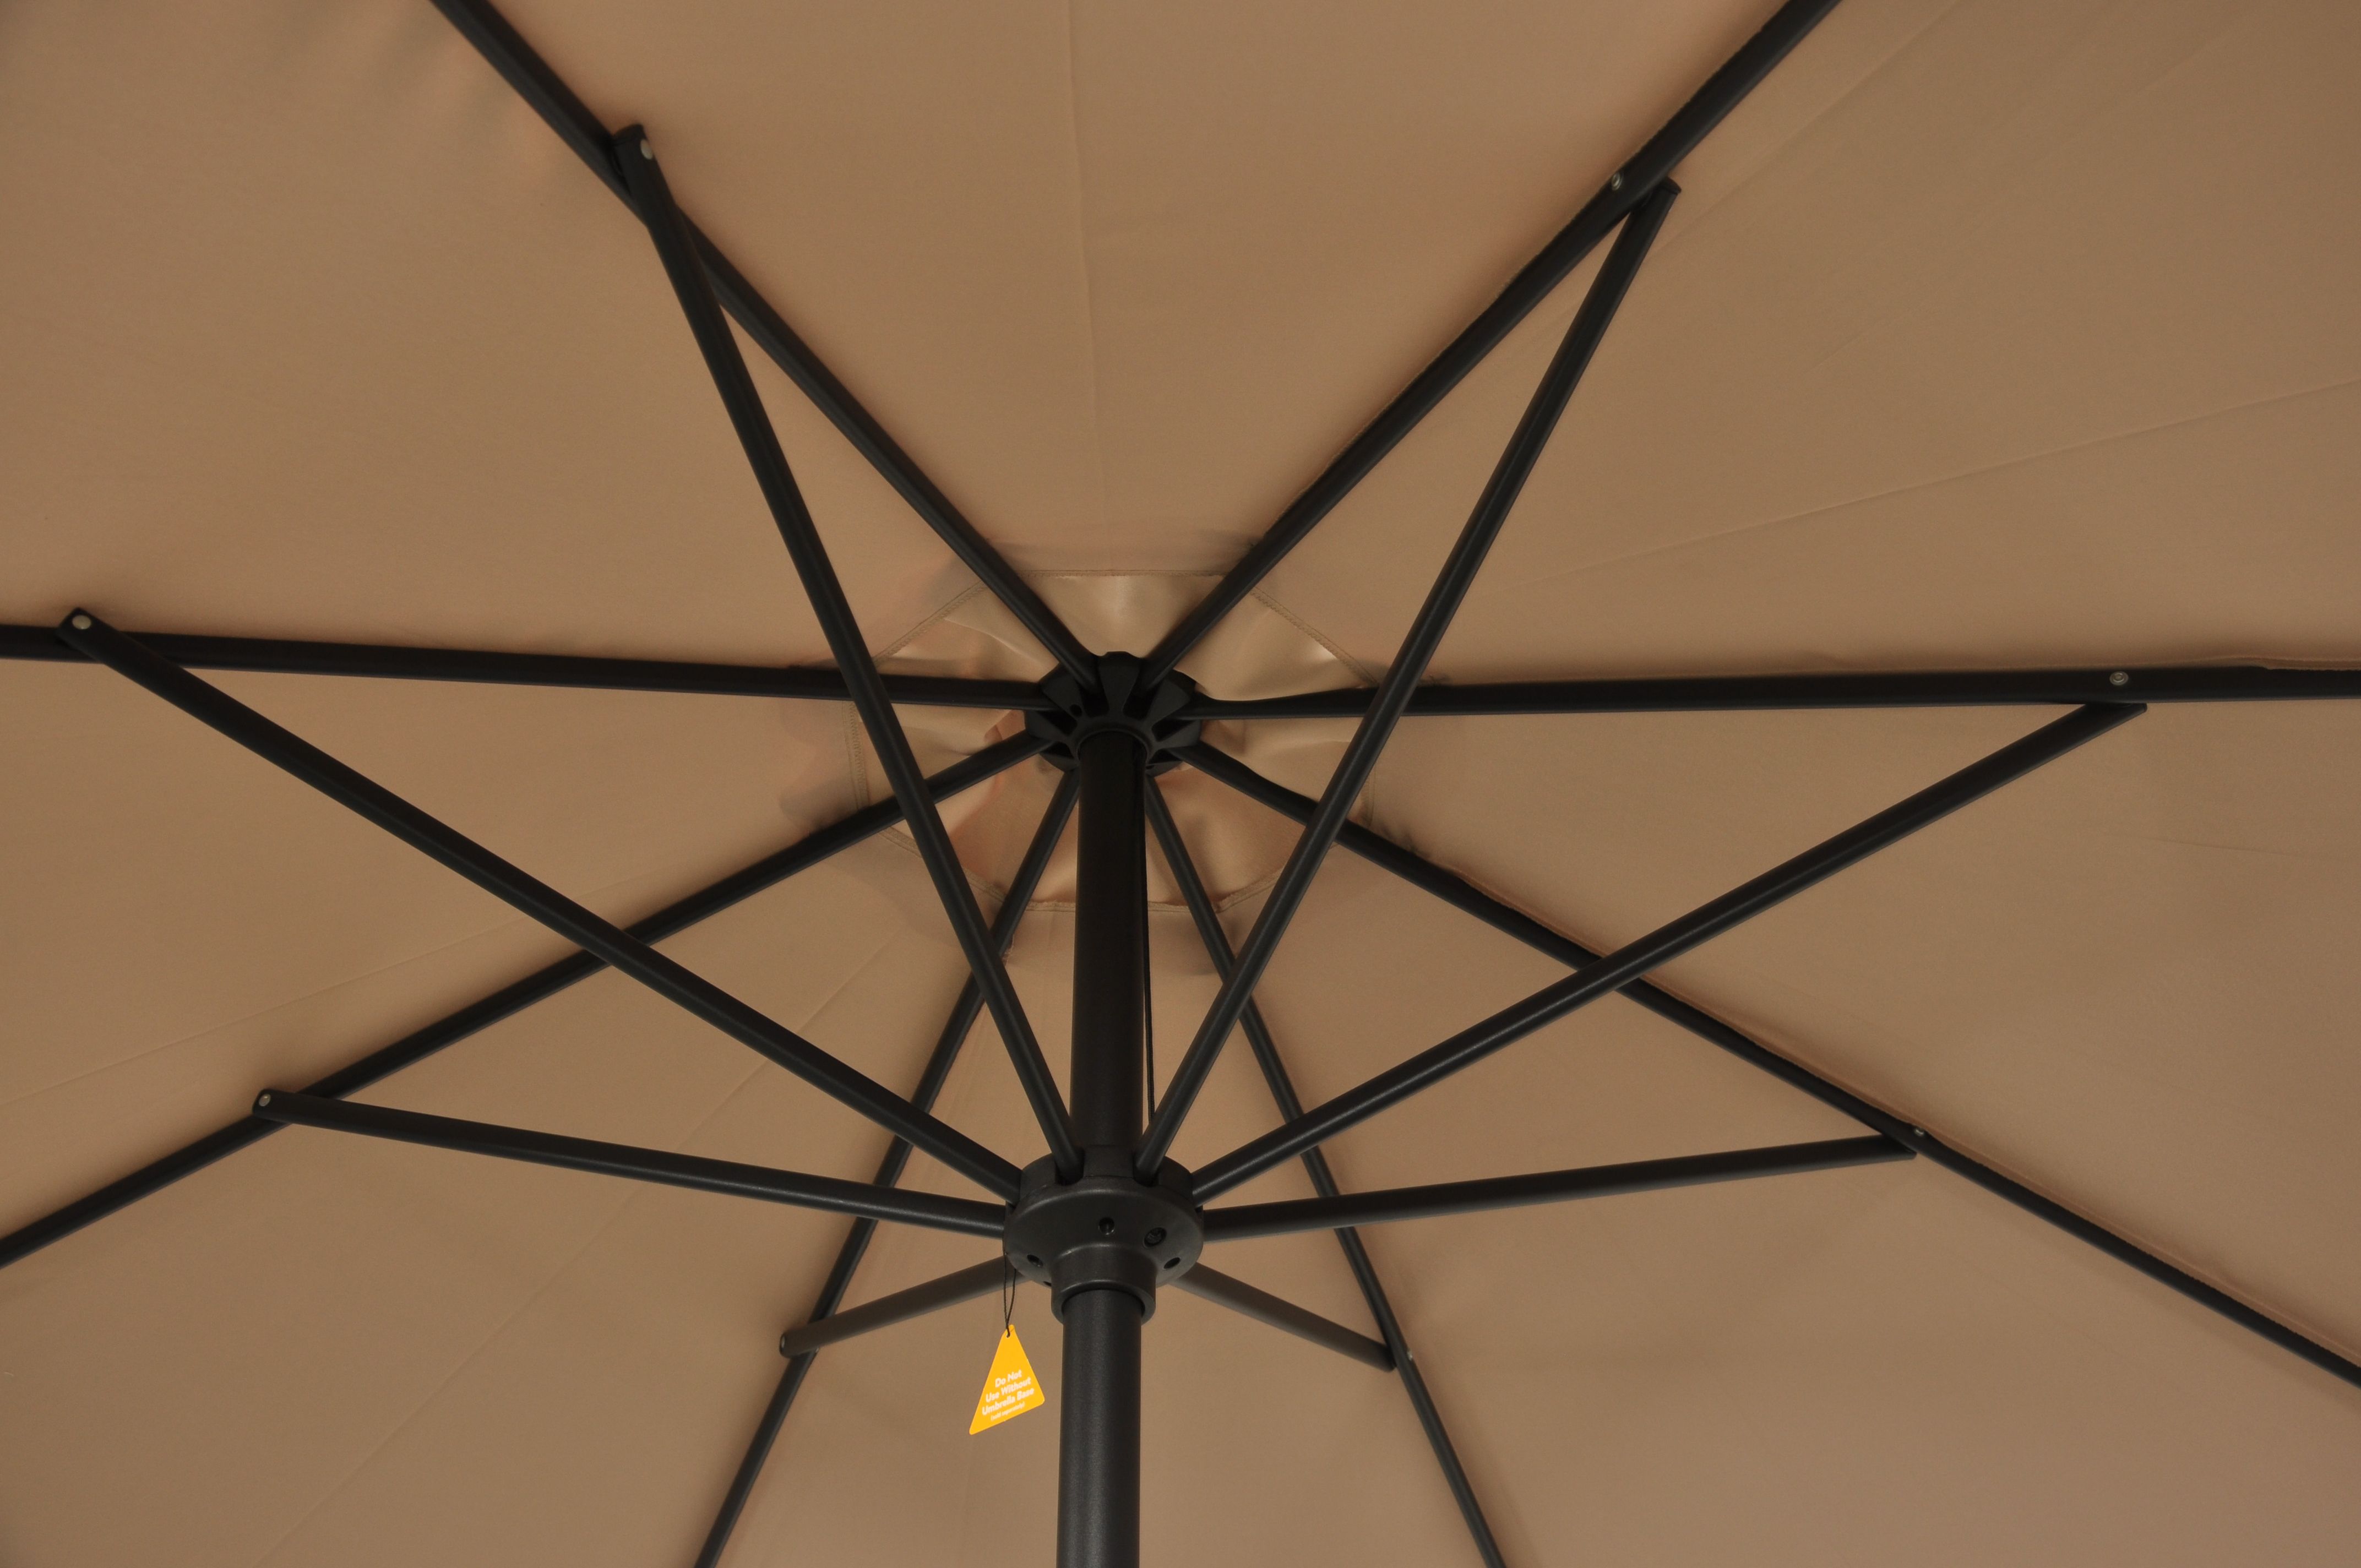 Mainstays 9' Outdoor Tilt Market Patio Umbrella - Tan - image 5 of 10